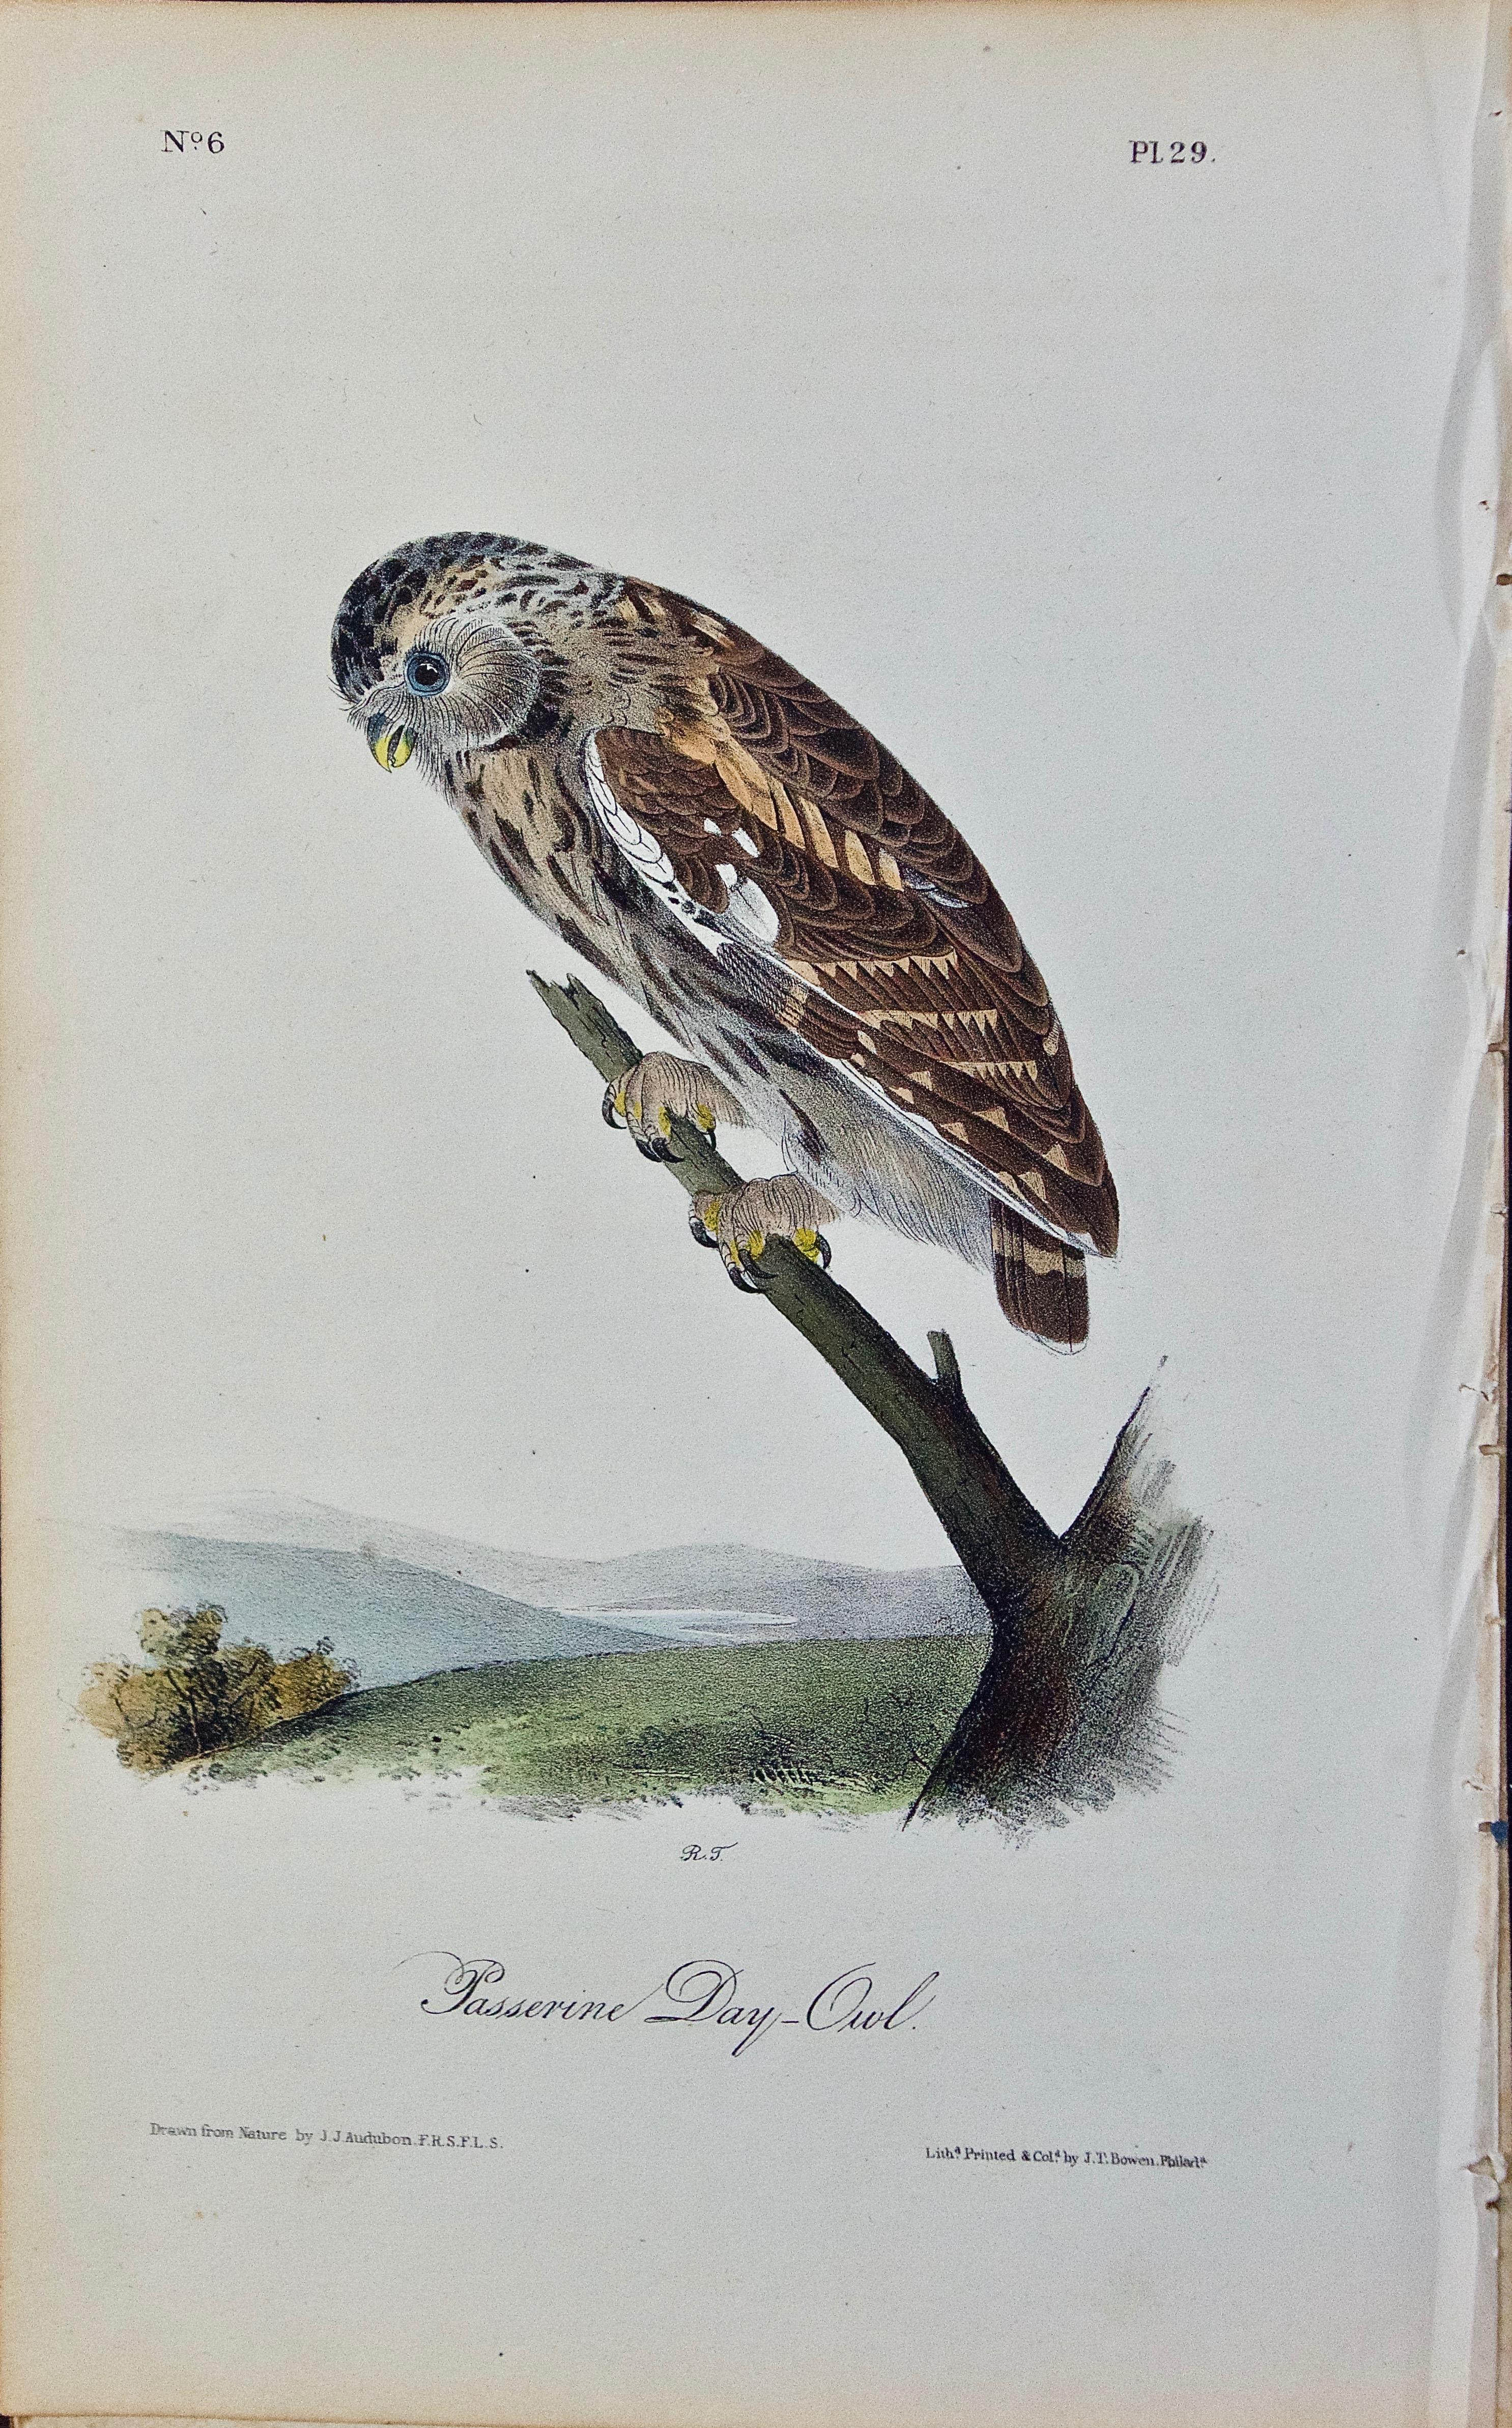 John James Audubon Animal Print - Original Audubon Hand Colored Bird Lithograph of "Passerine Day-Owl" 